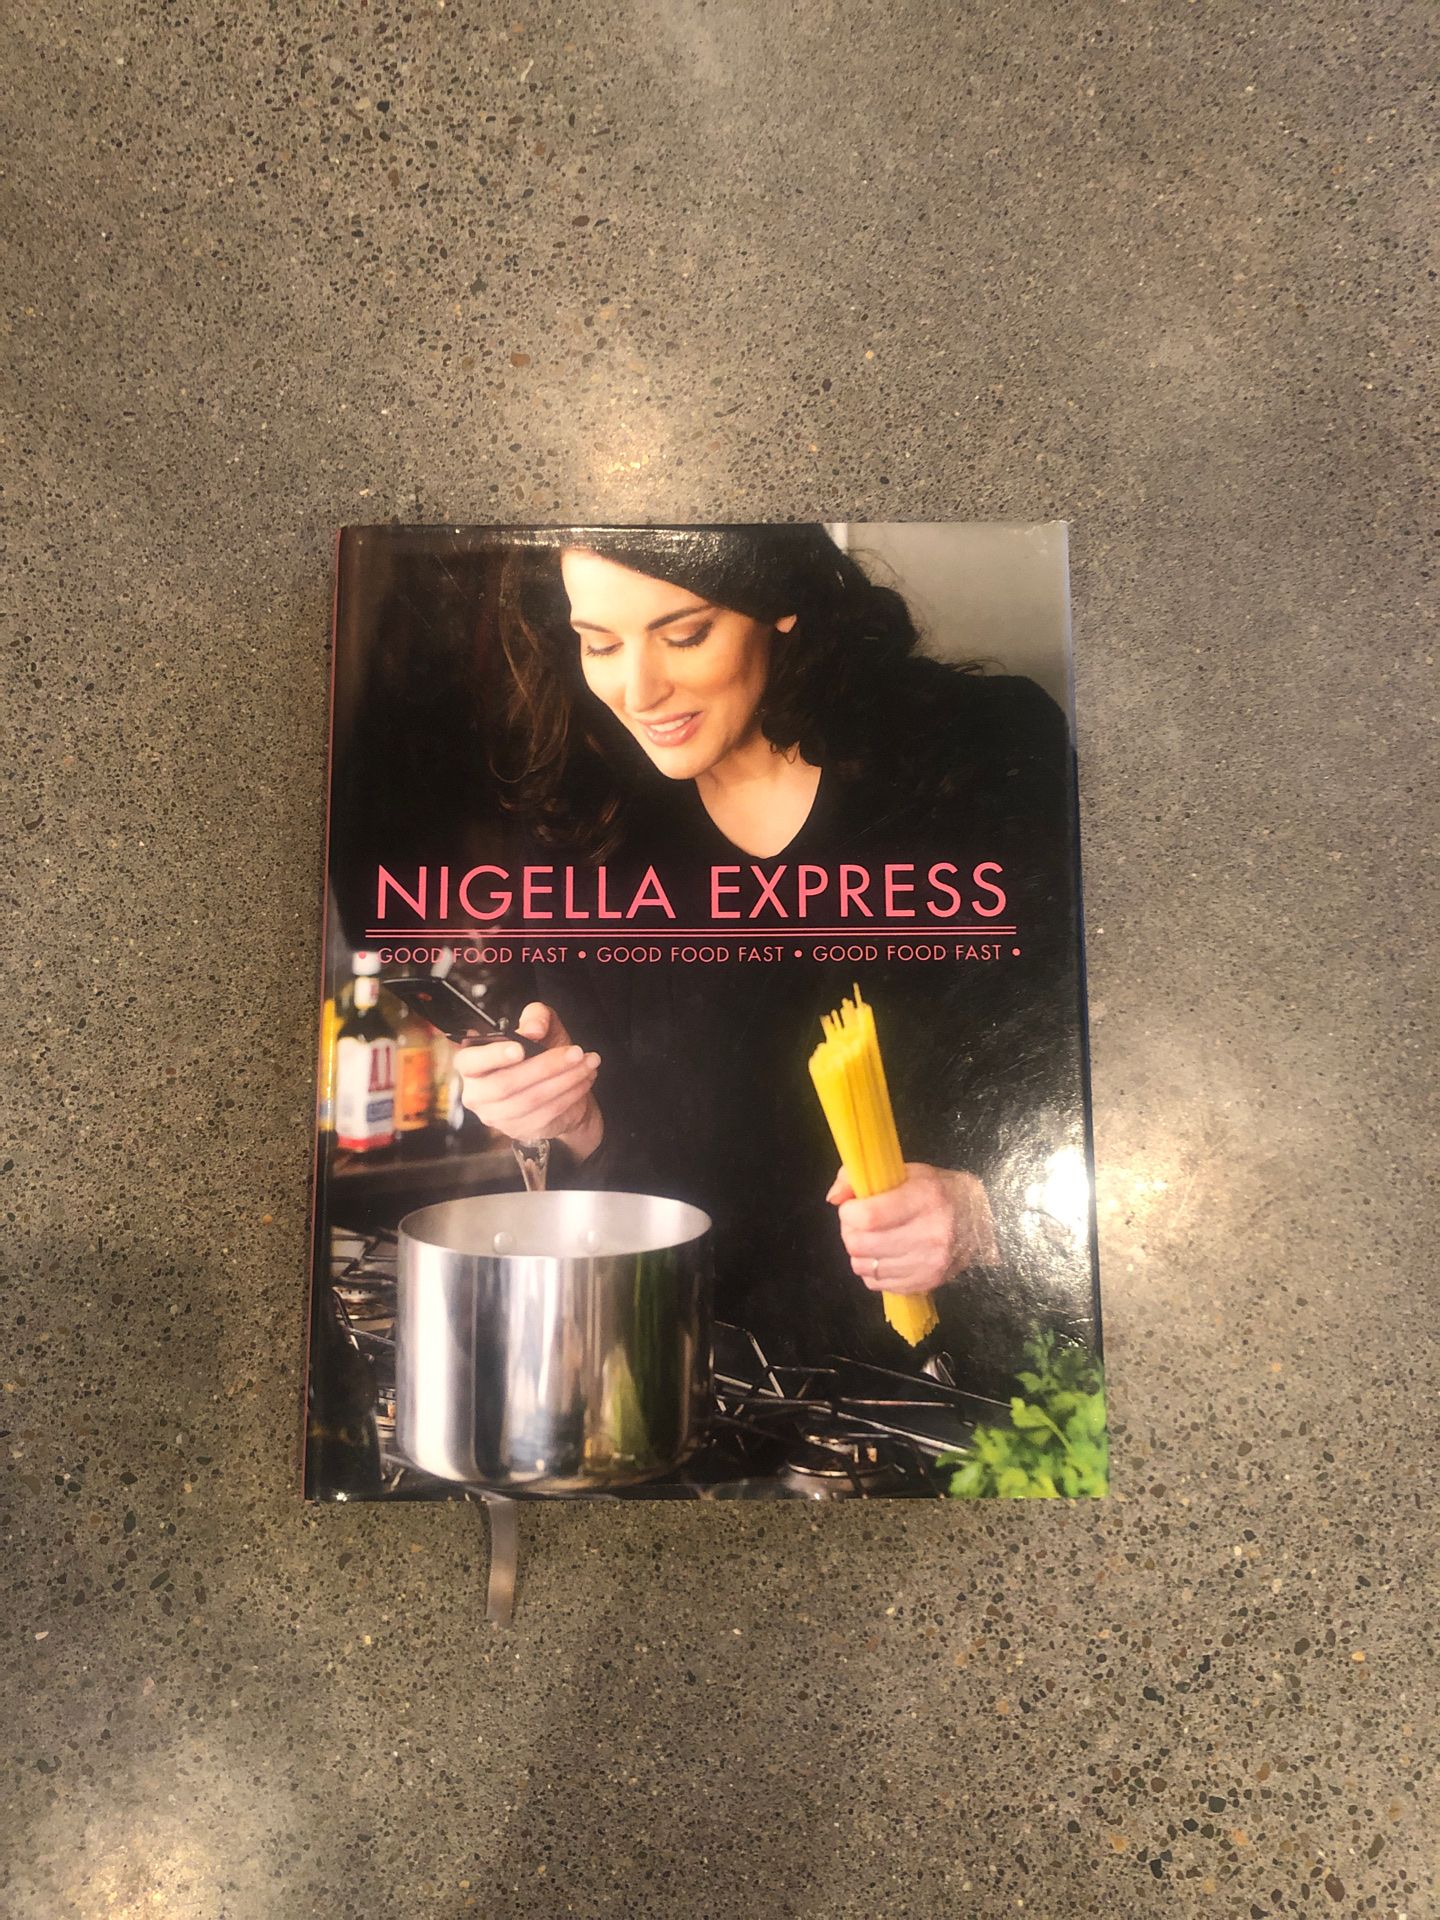 Nigella Lawson cookbook